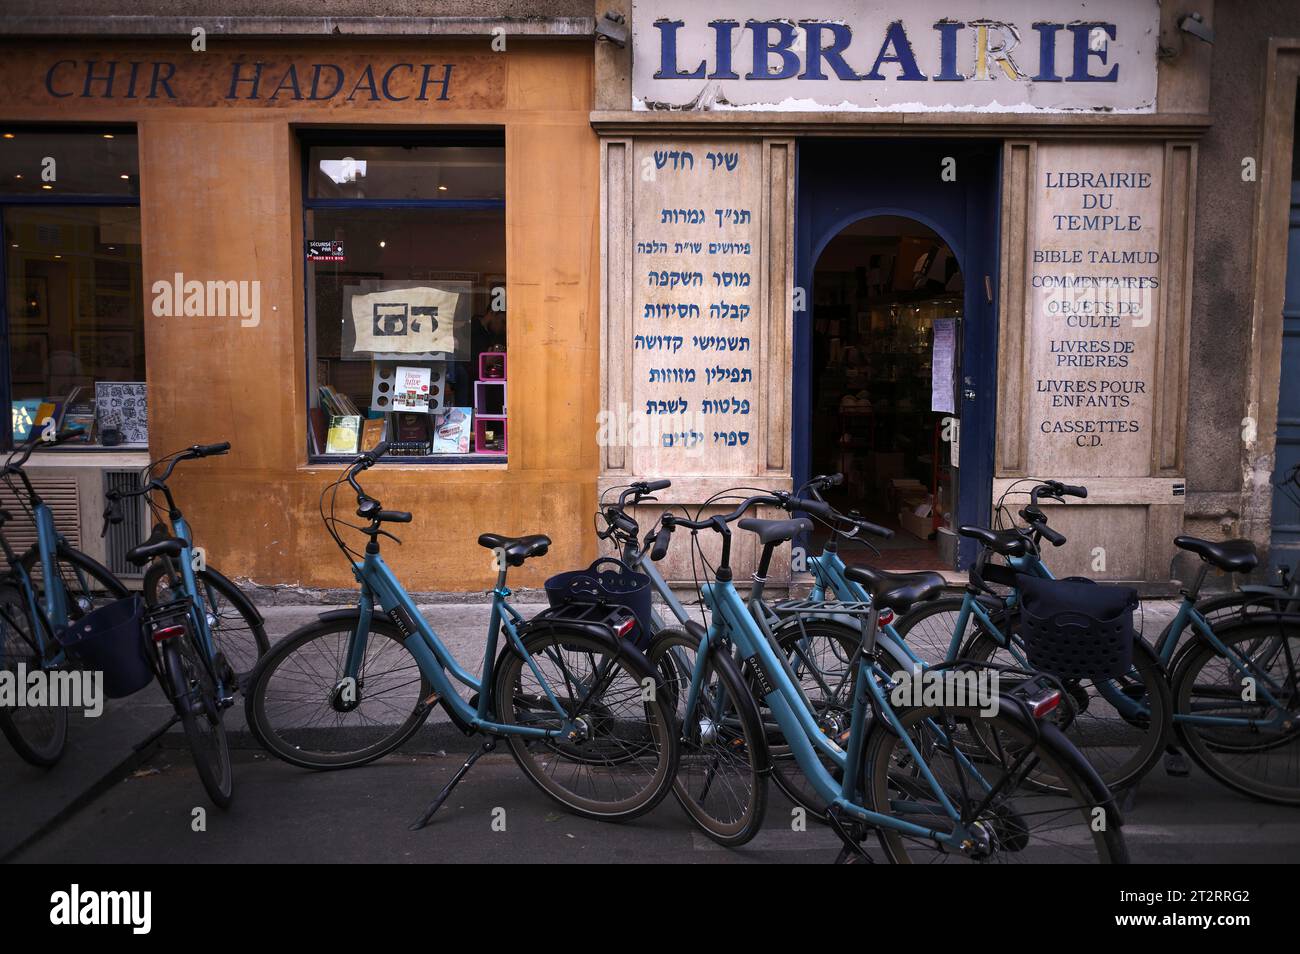 Bicycles for rent in front of Chir Hadach bookshop, Librairie du Tempel, Marais Jewish Quarter, Village St. Paul, Paris, France Stock Photo